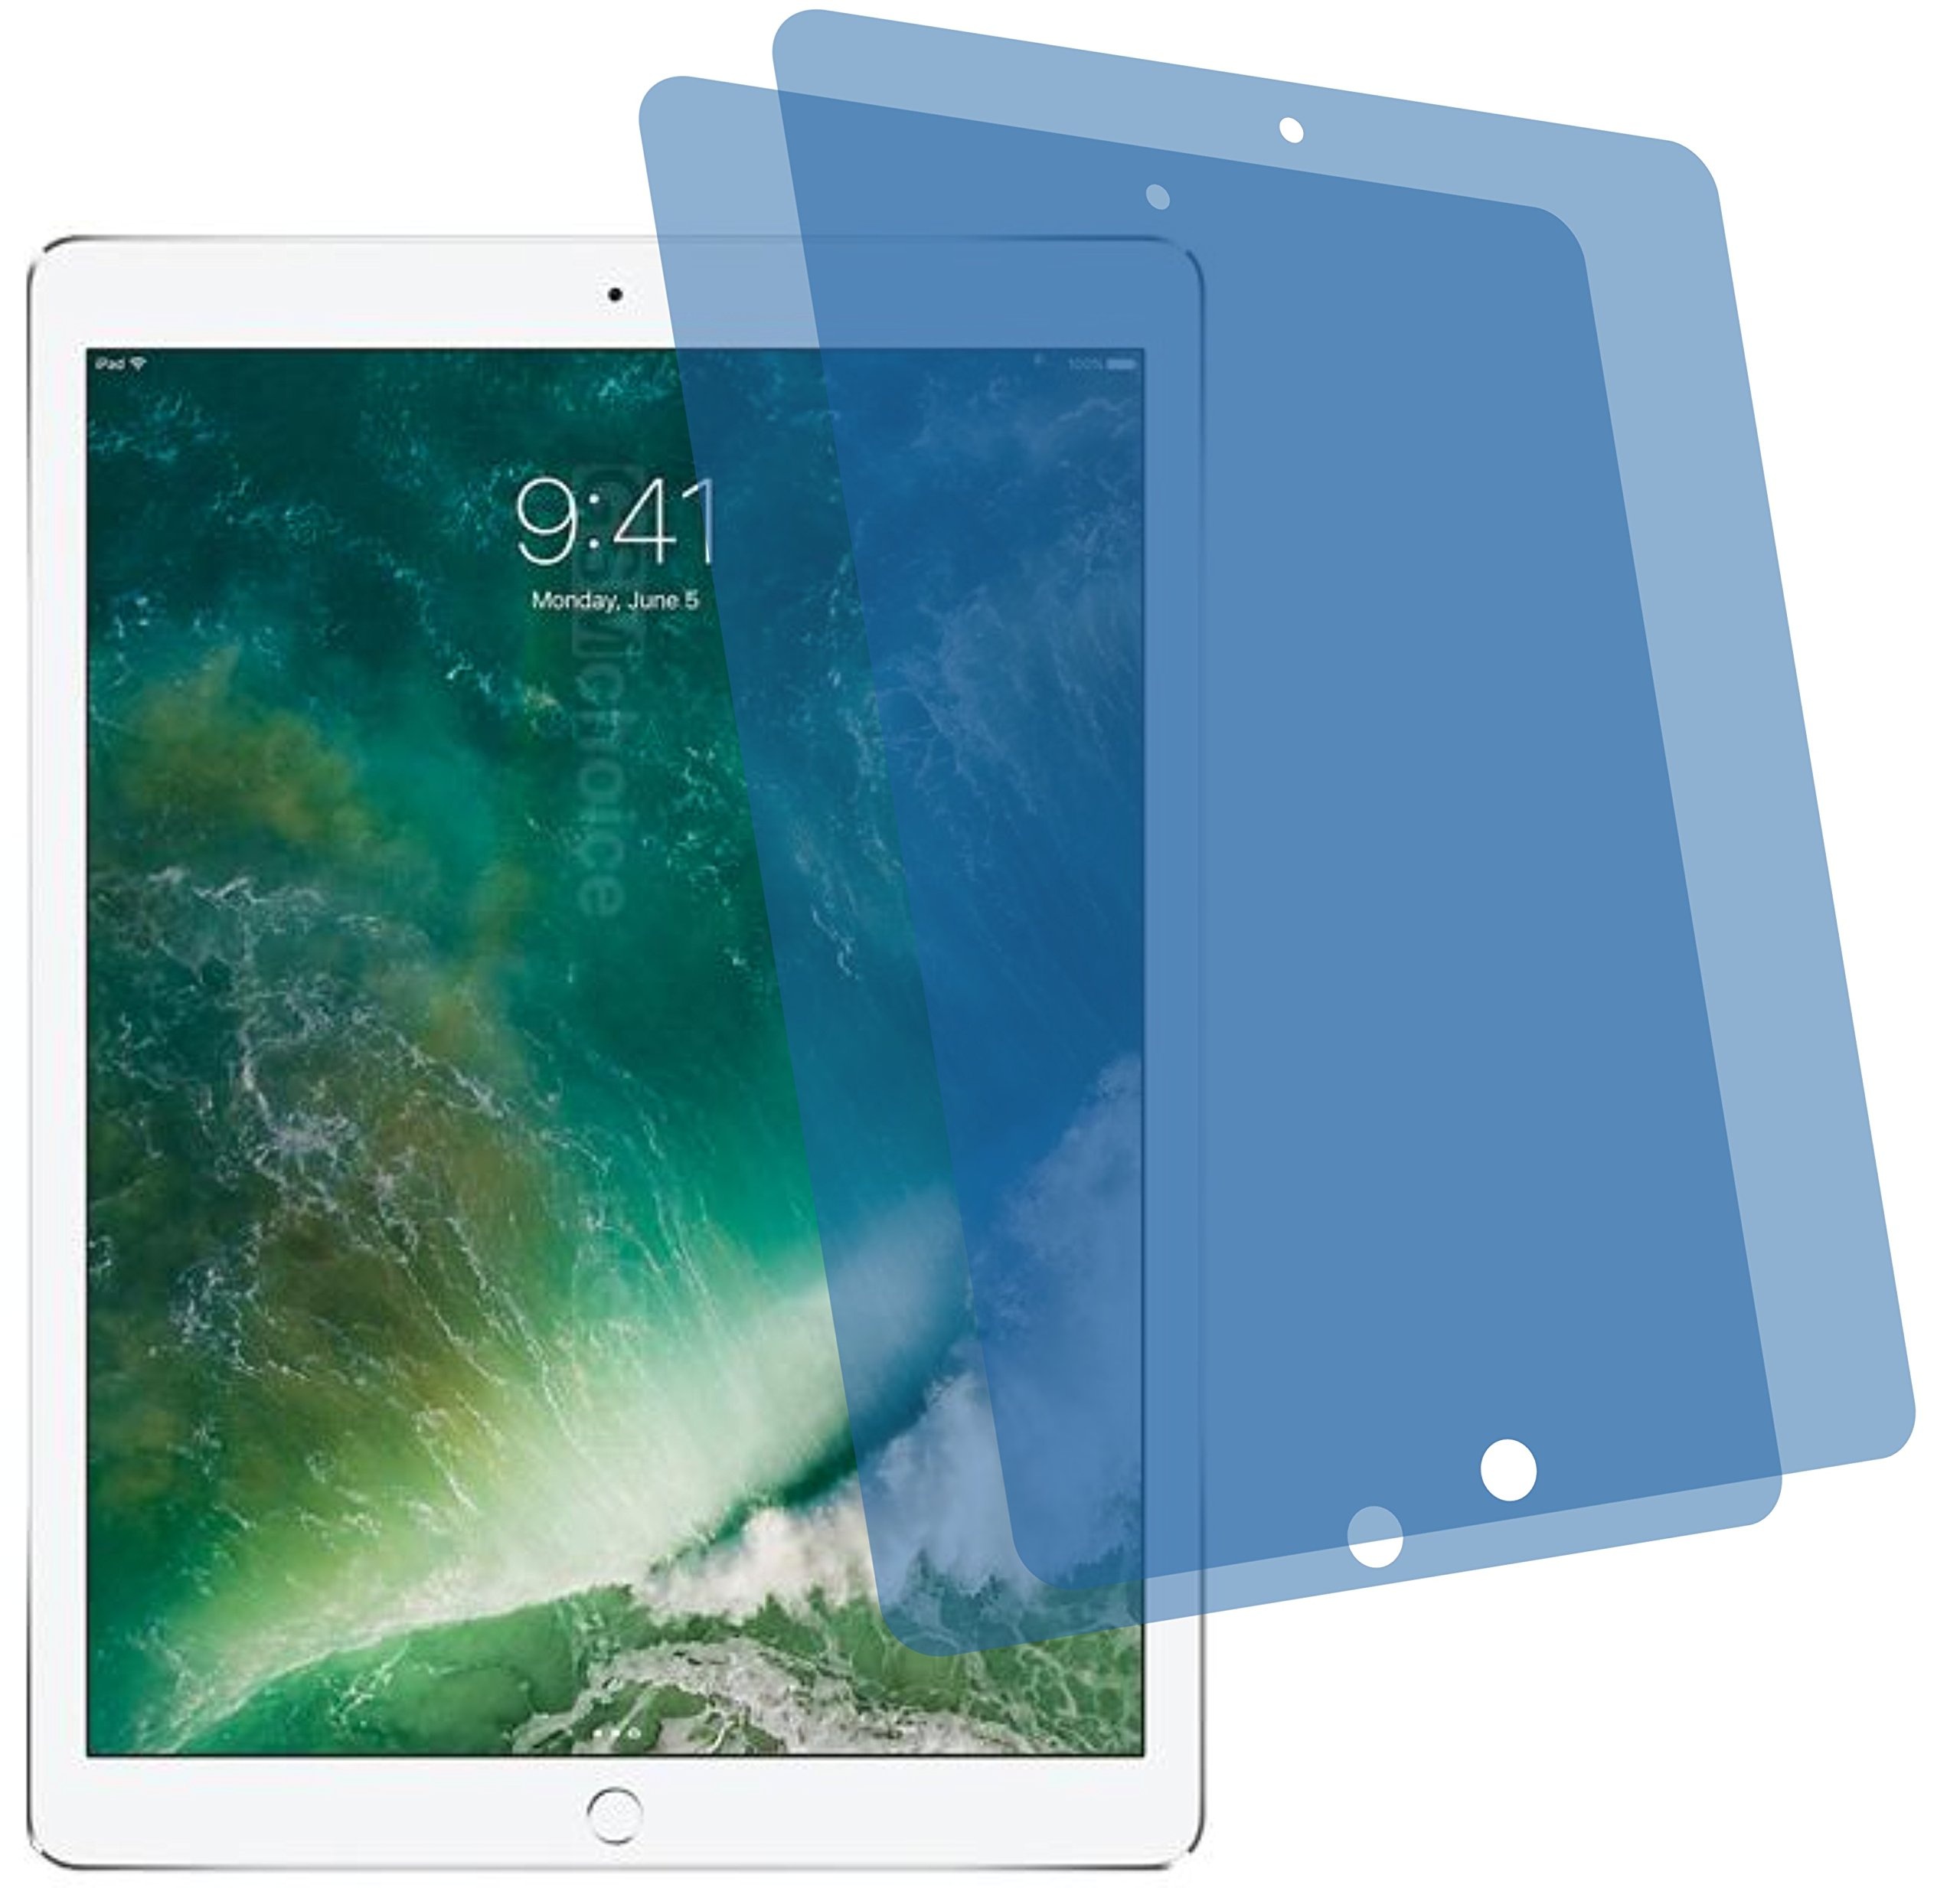 I 2X Crystal Clear klar Schutzfolie für Apple iPad Pro 12.9 Zoll (2017) Premium Displayschutzfolie Bildschirmschutzfolie Schutzhülle Displayschutz Displayfolie Folie